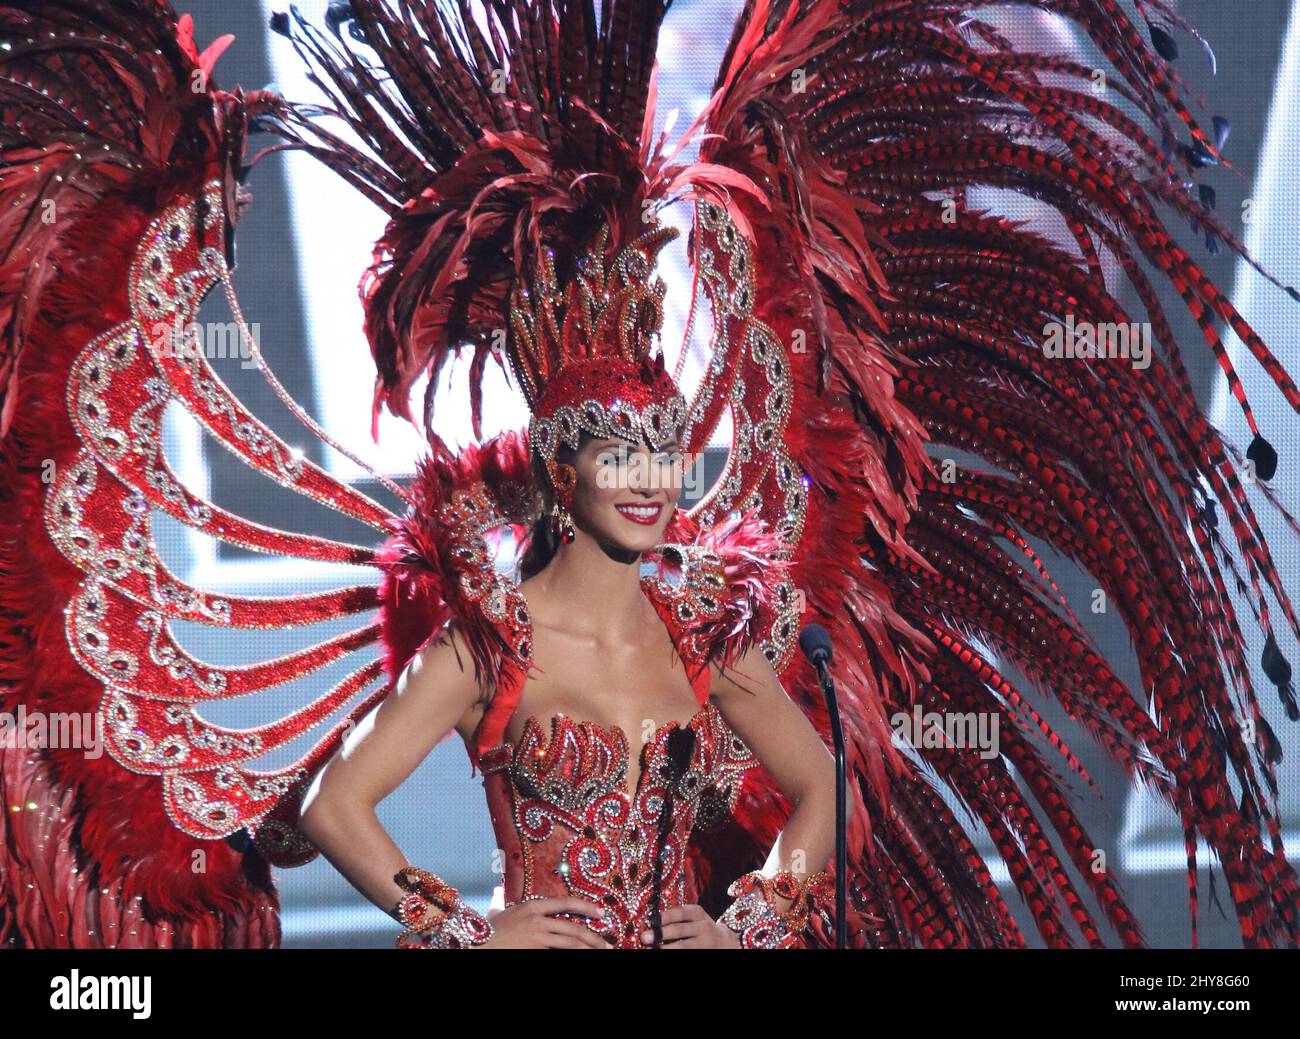 Miss Venezuela, Mariana Jimenez during the 2015 Miss Universe National National Costume Show, Planet Hollywood Resort & Casino. Stock Photo